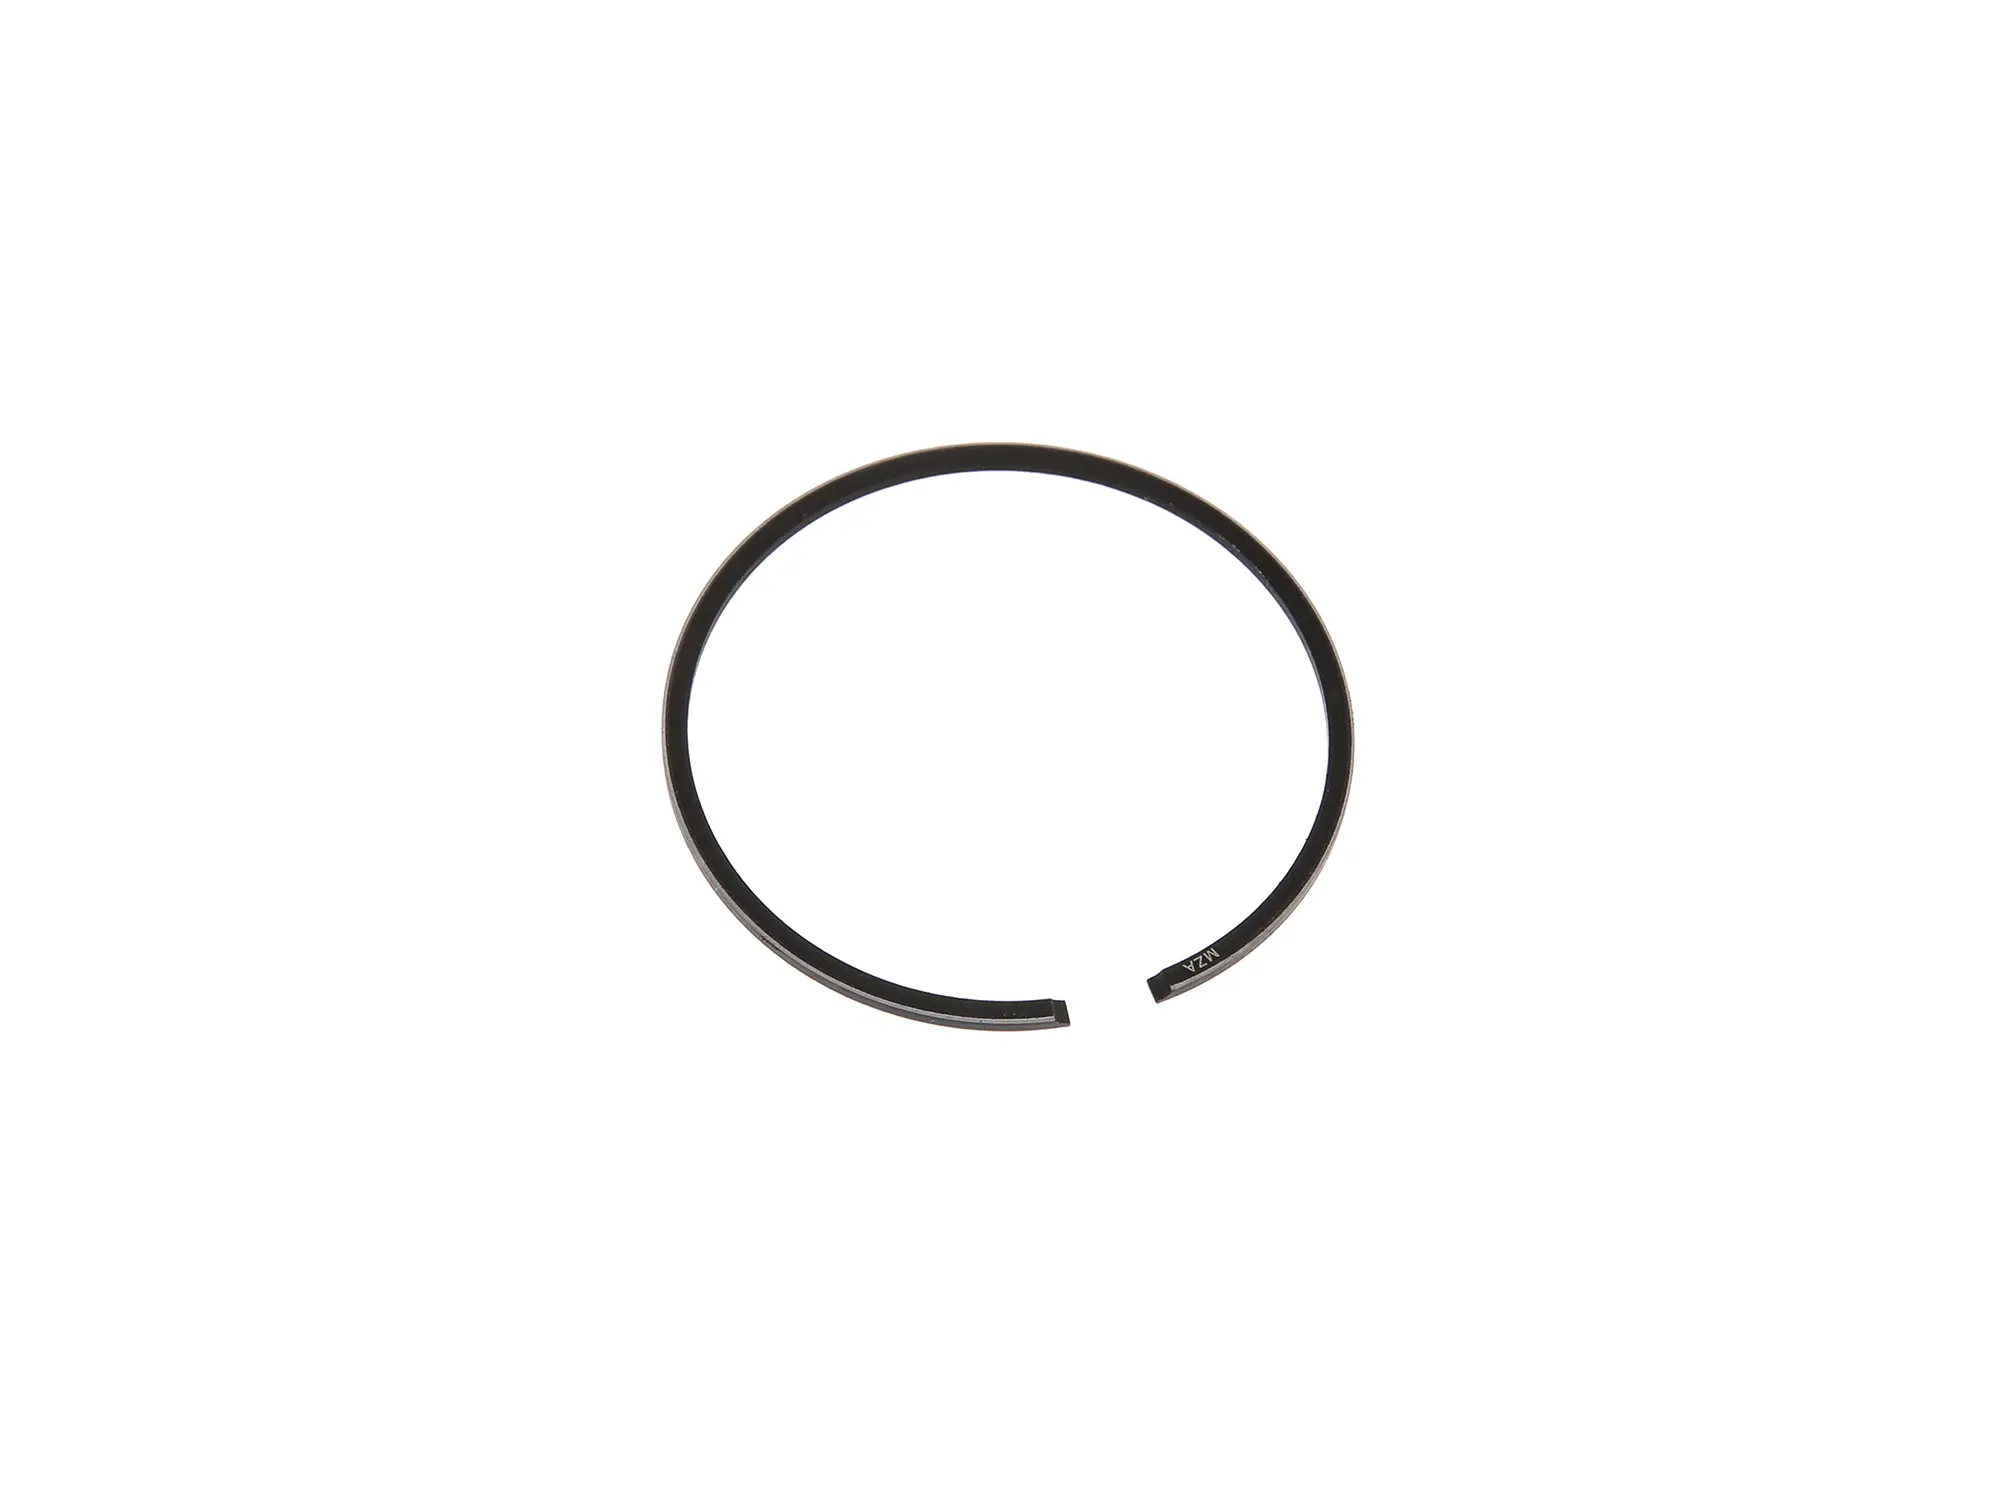 Kolbenring Ø41,00 x 1,2 mm für 1-Ring-Tuningkolben - S61, Art.-Nr.: 10008472 - Bild 1